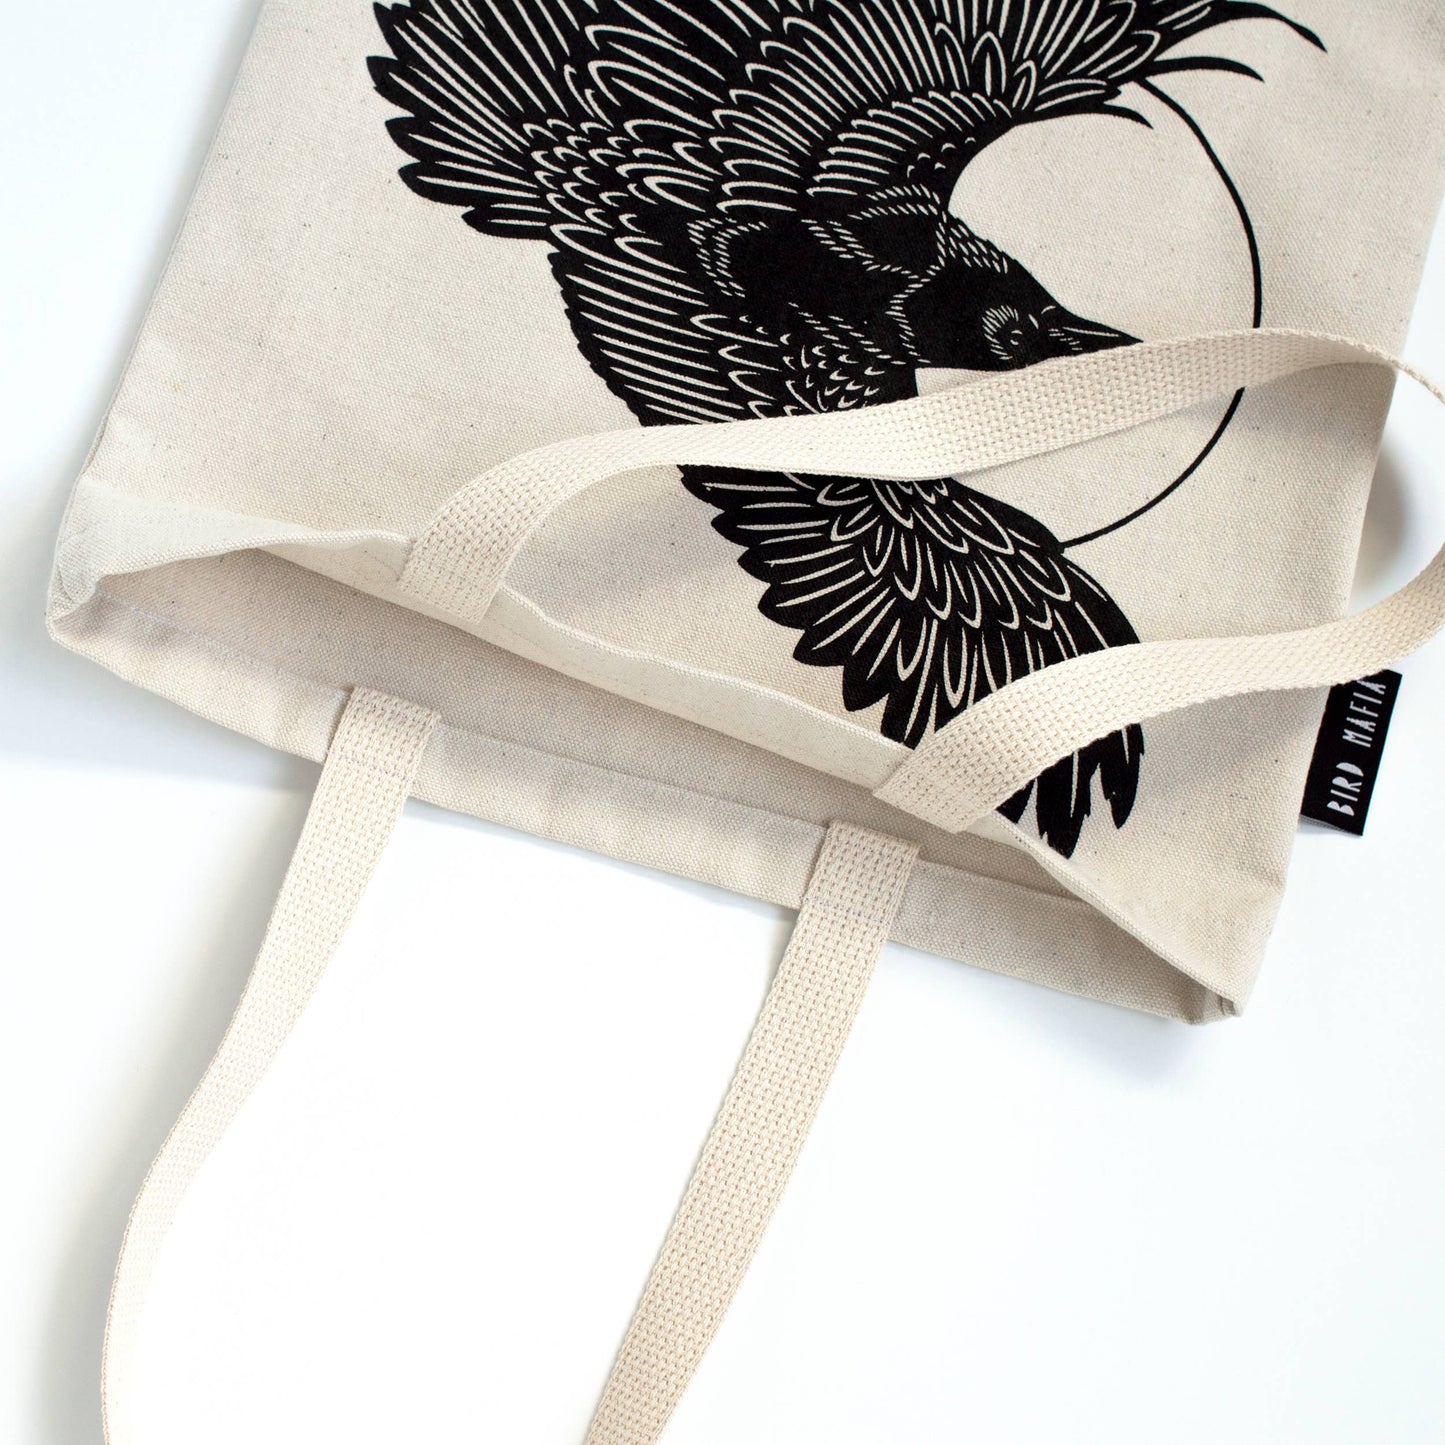 Crow tote bag